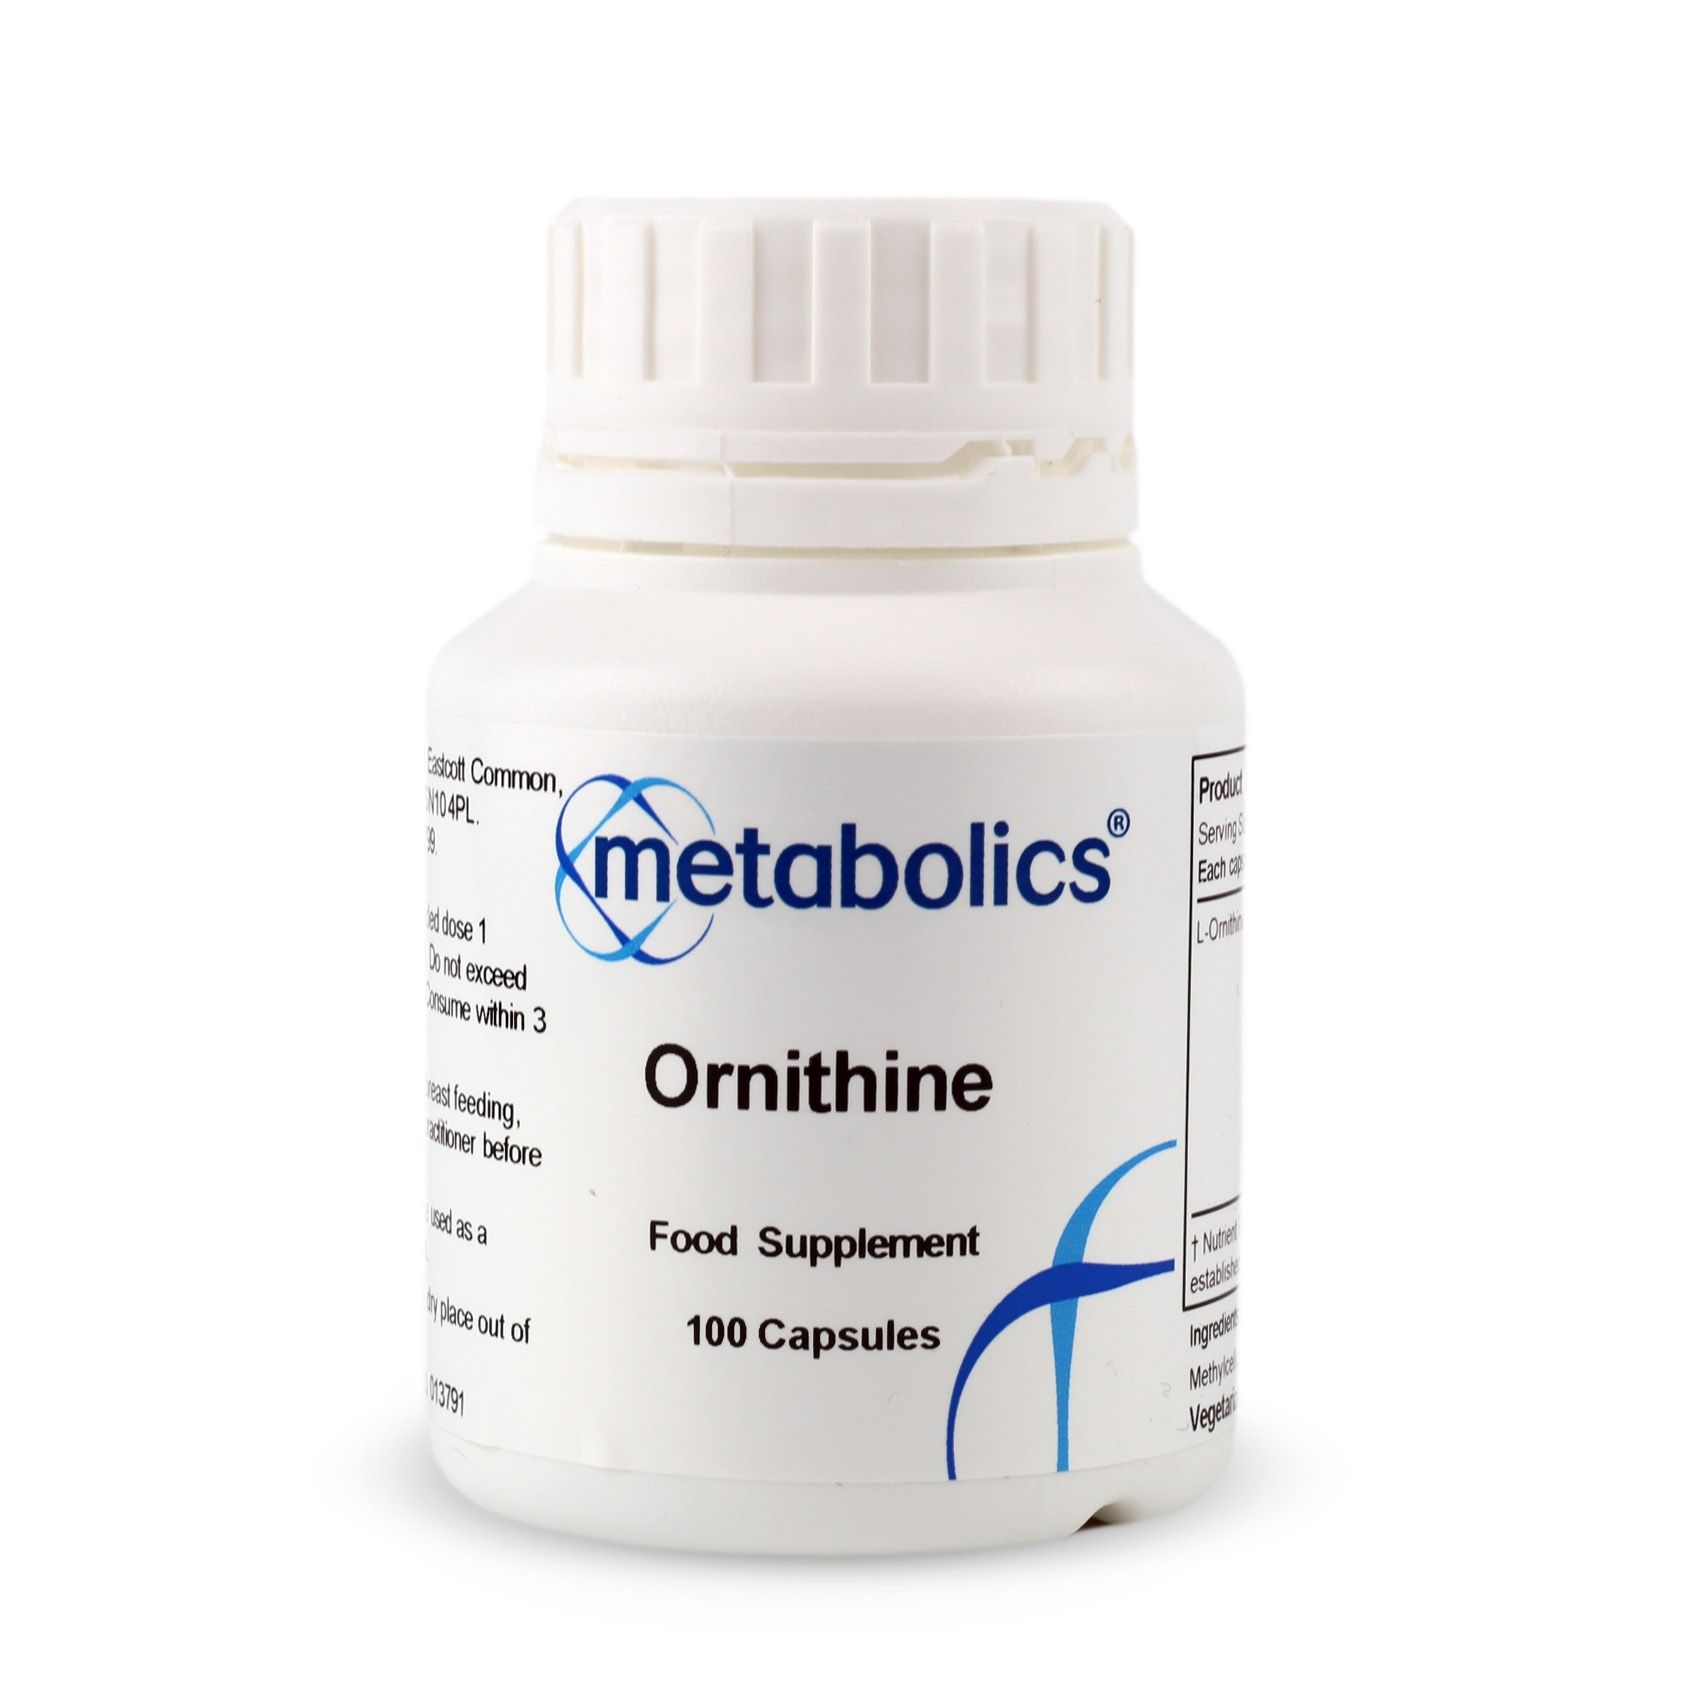 Ornithine (Pot of 100 capsules)